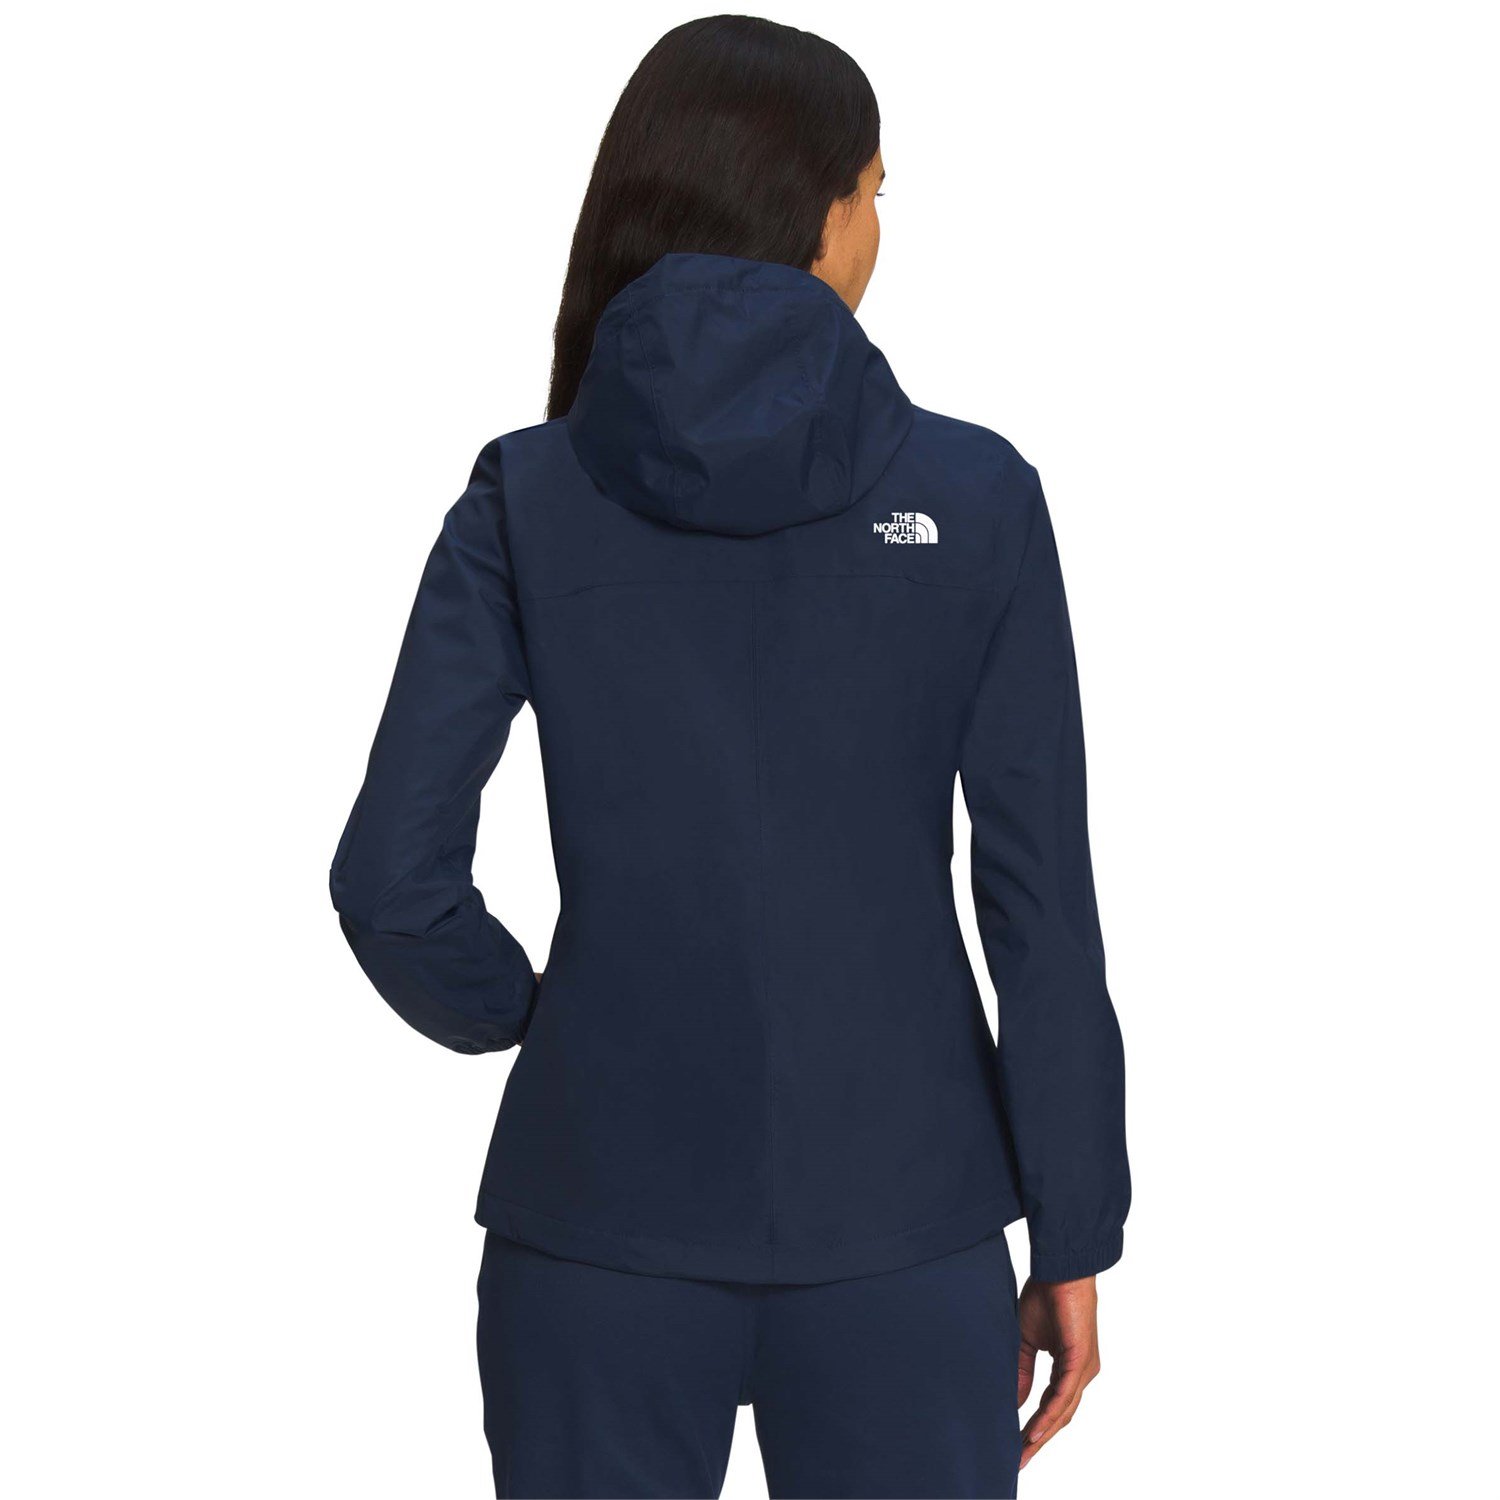 The North Face Antora Jacket - Women's TNF Black / Skylight Blue S